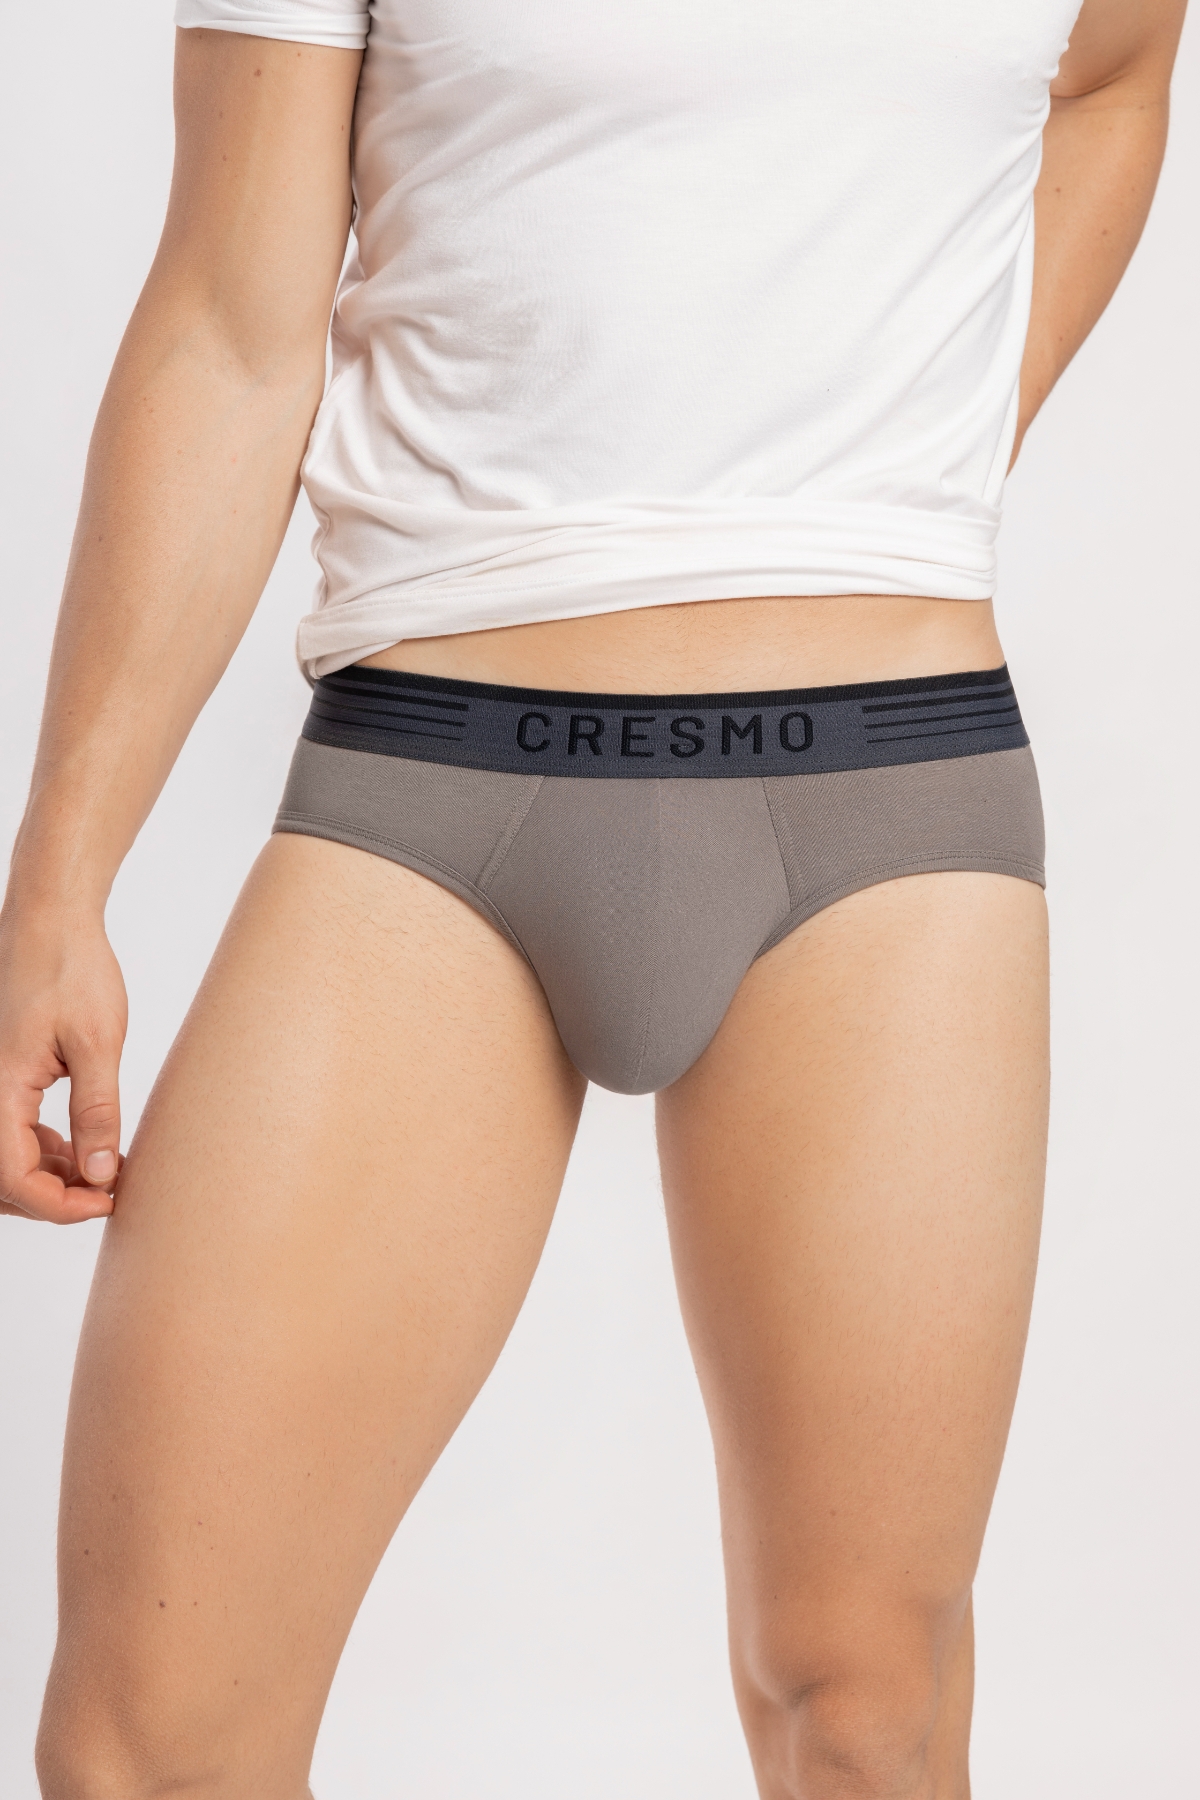 CRESMO | CRESMO Men's Anti-Microbial Micro Modal Underwear Breathable Ultra Soft Comfort Lightweight Brief